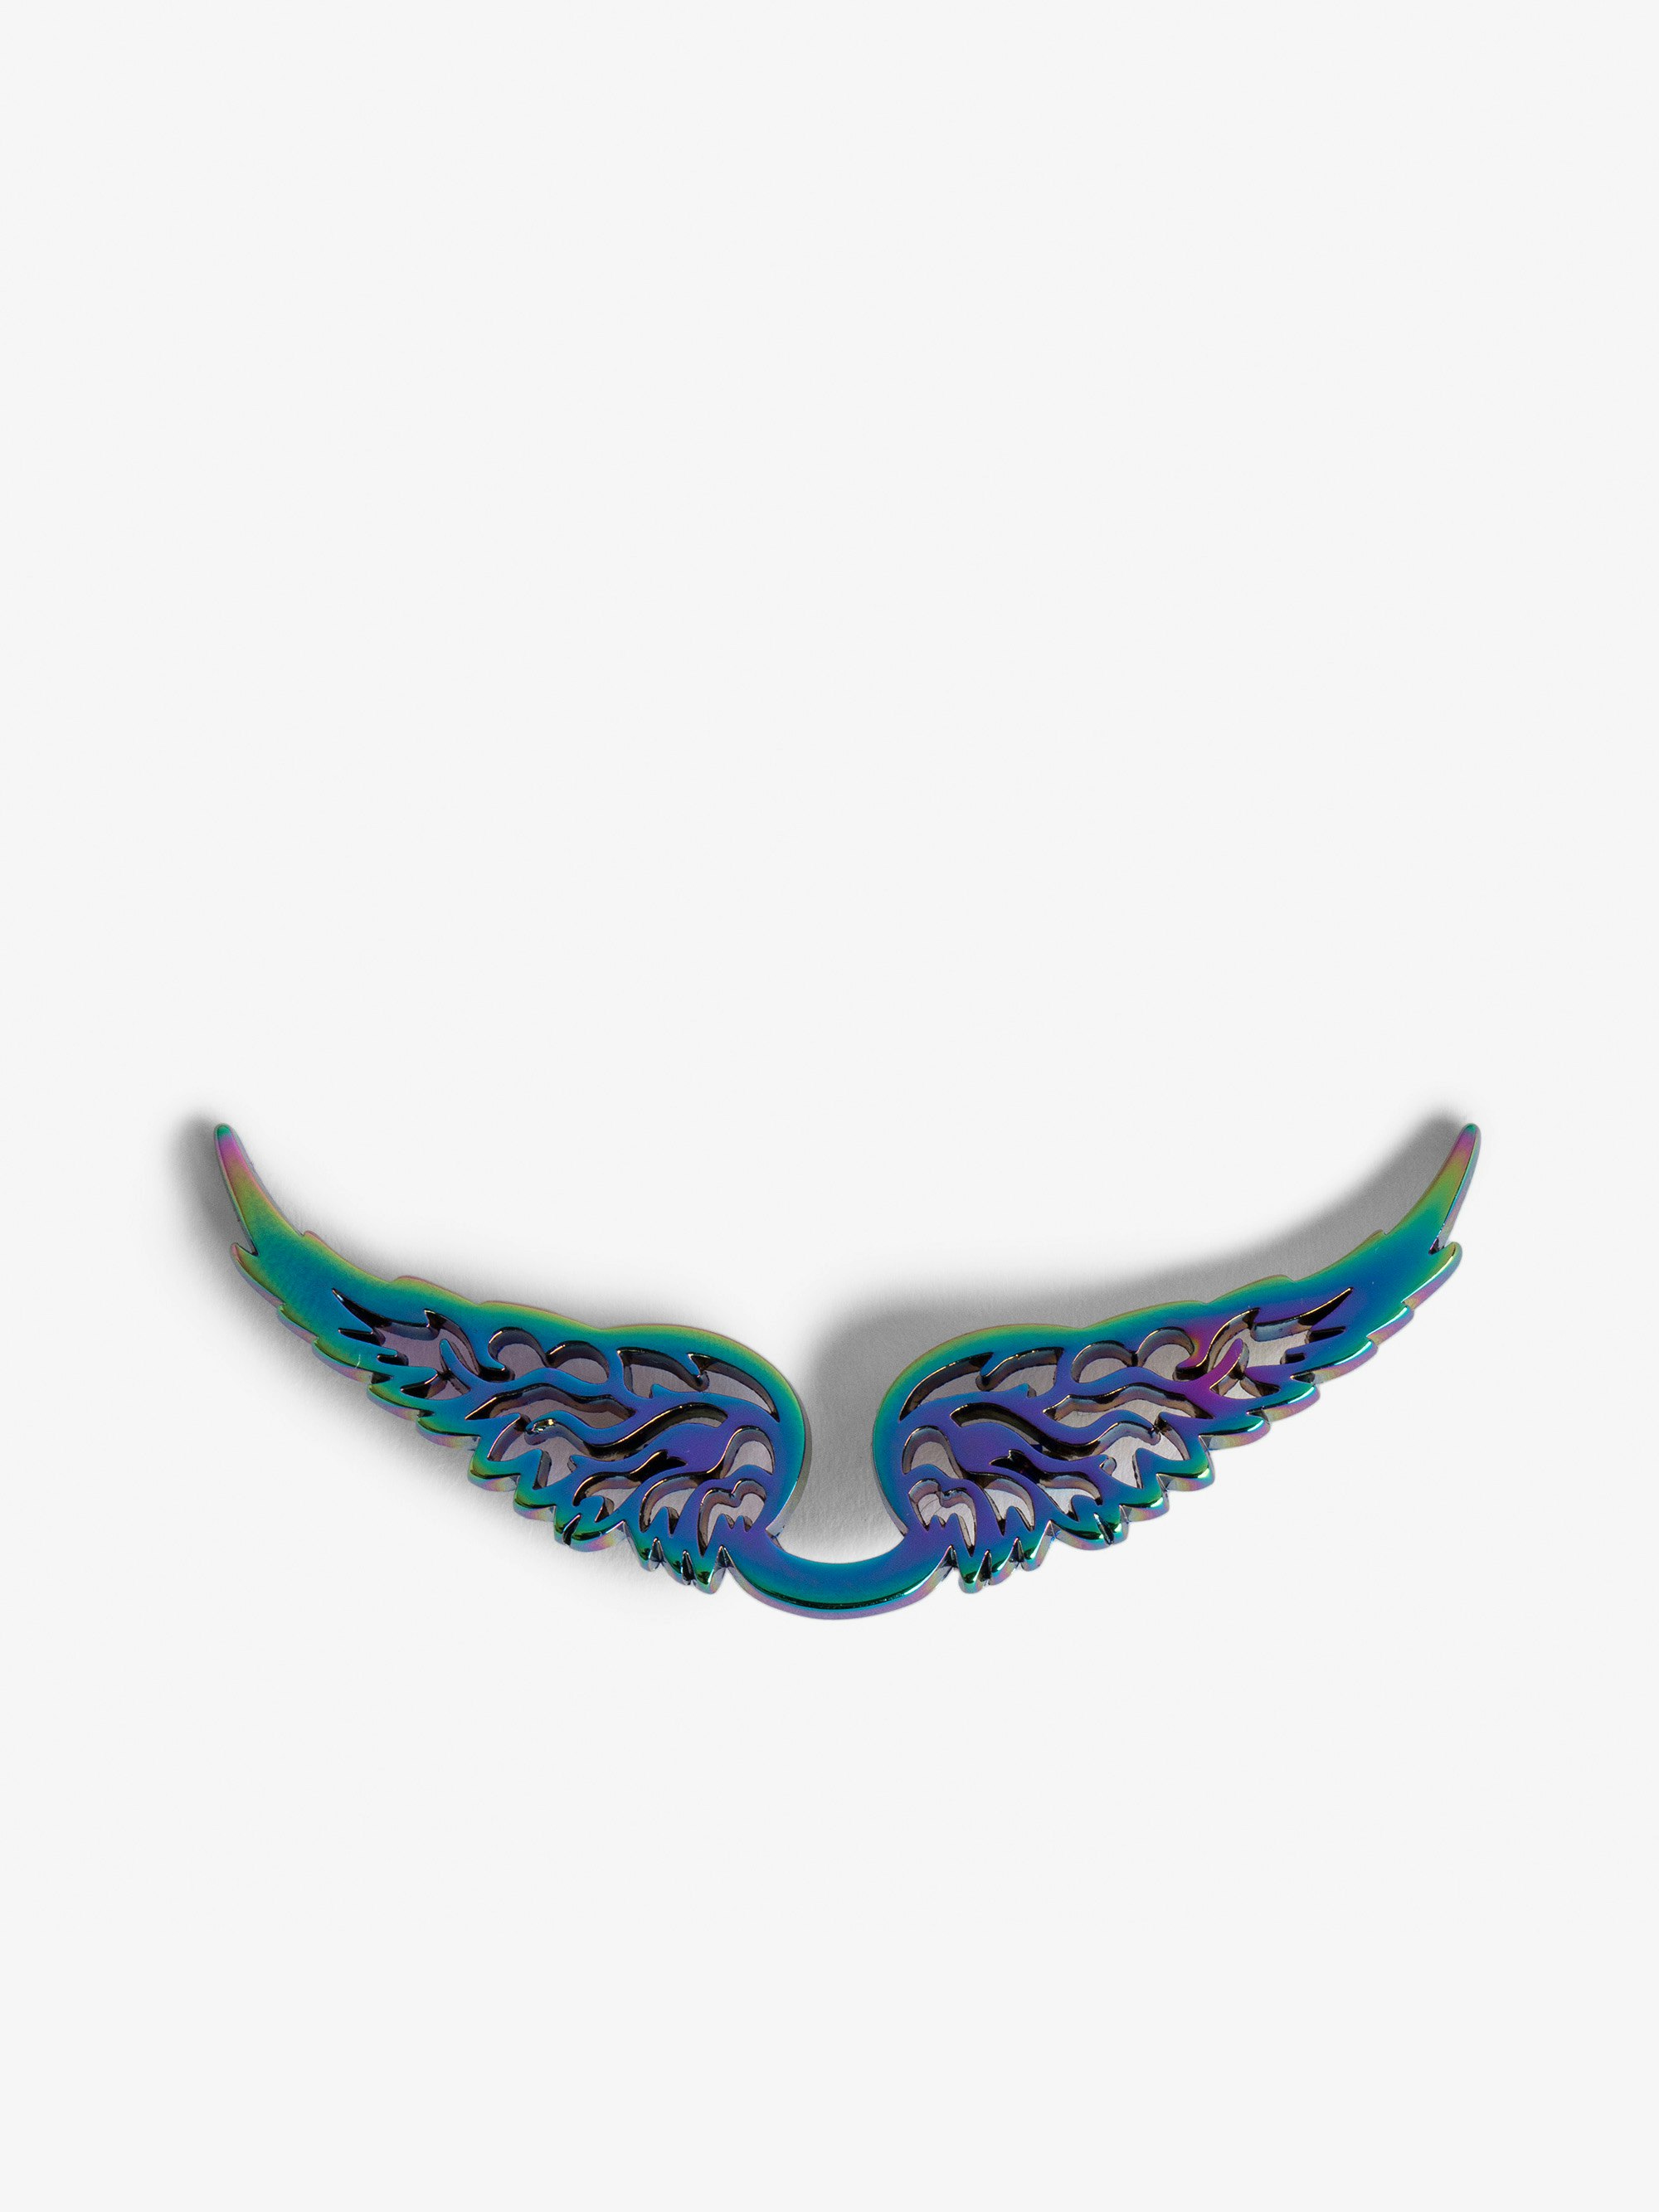 Colgante Swing Your Wings Arcoíris - Colgante de alas desmontable Swing Your Wings.